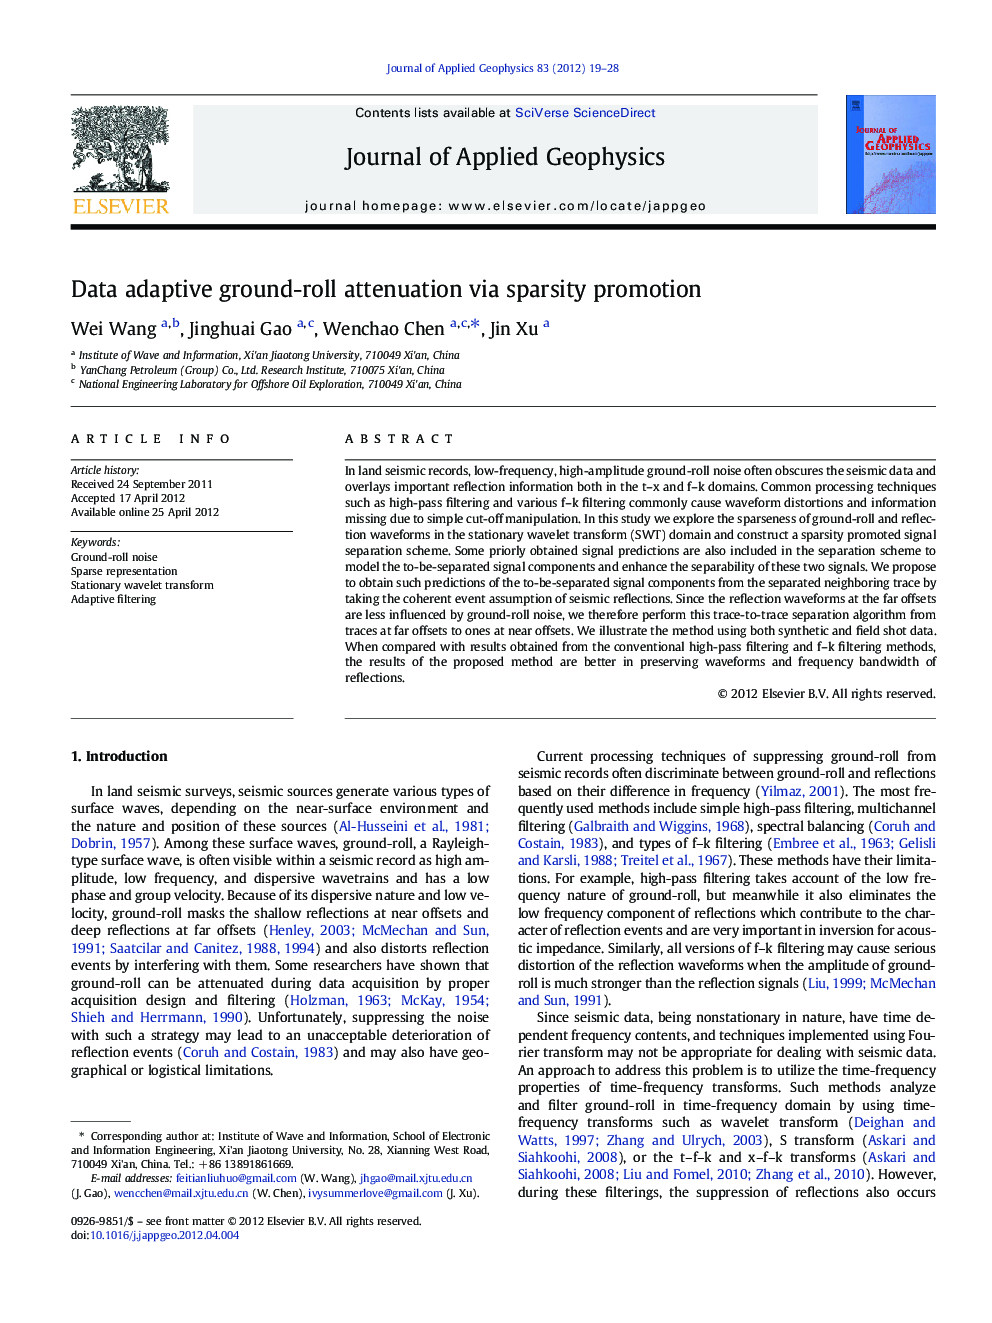 Data adaptive ground-roll attenuation via sparsity promotion